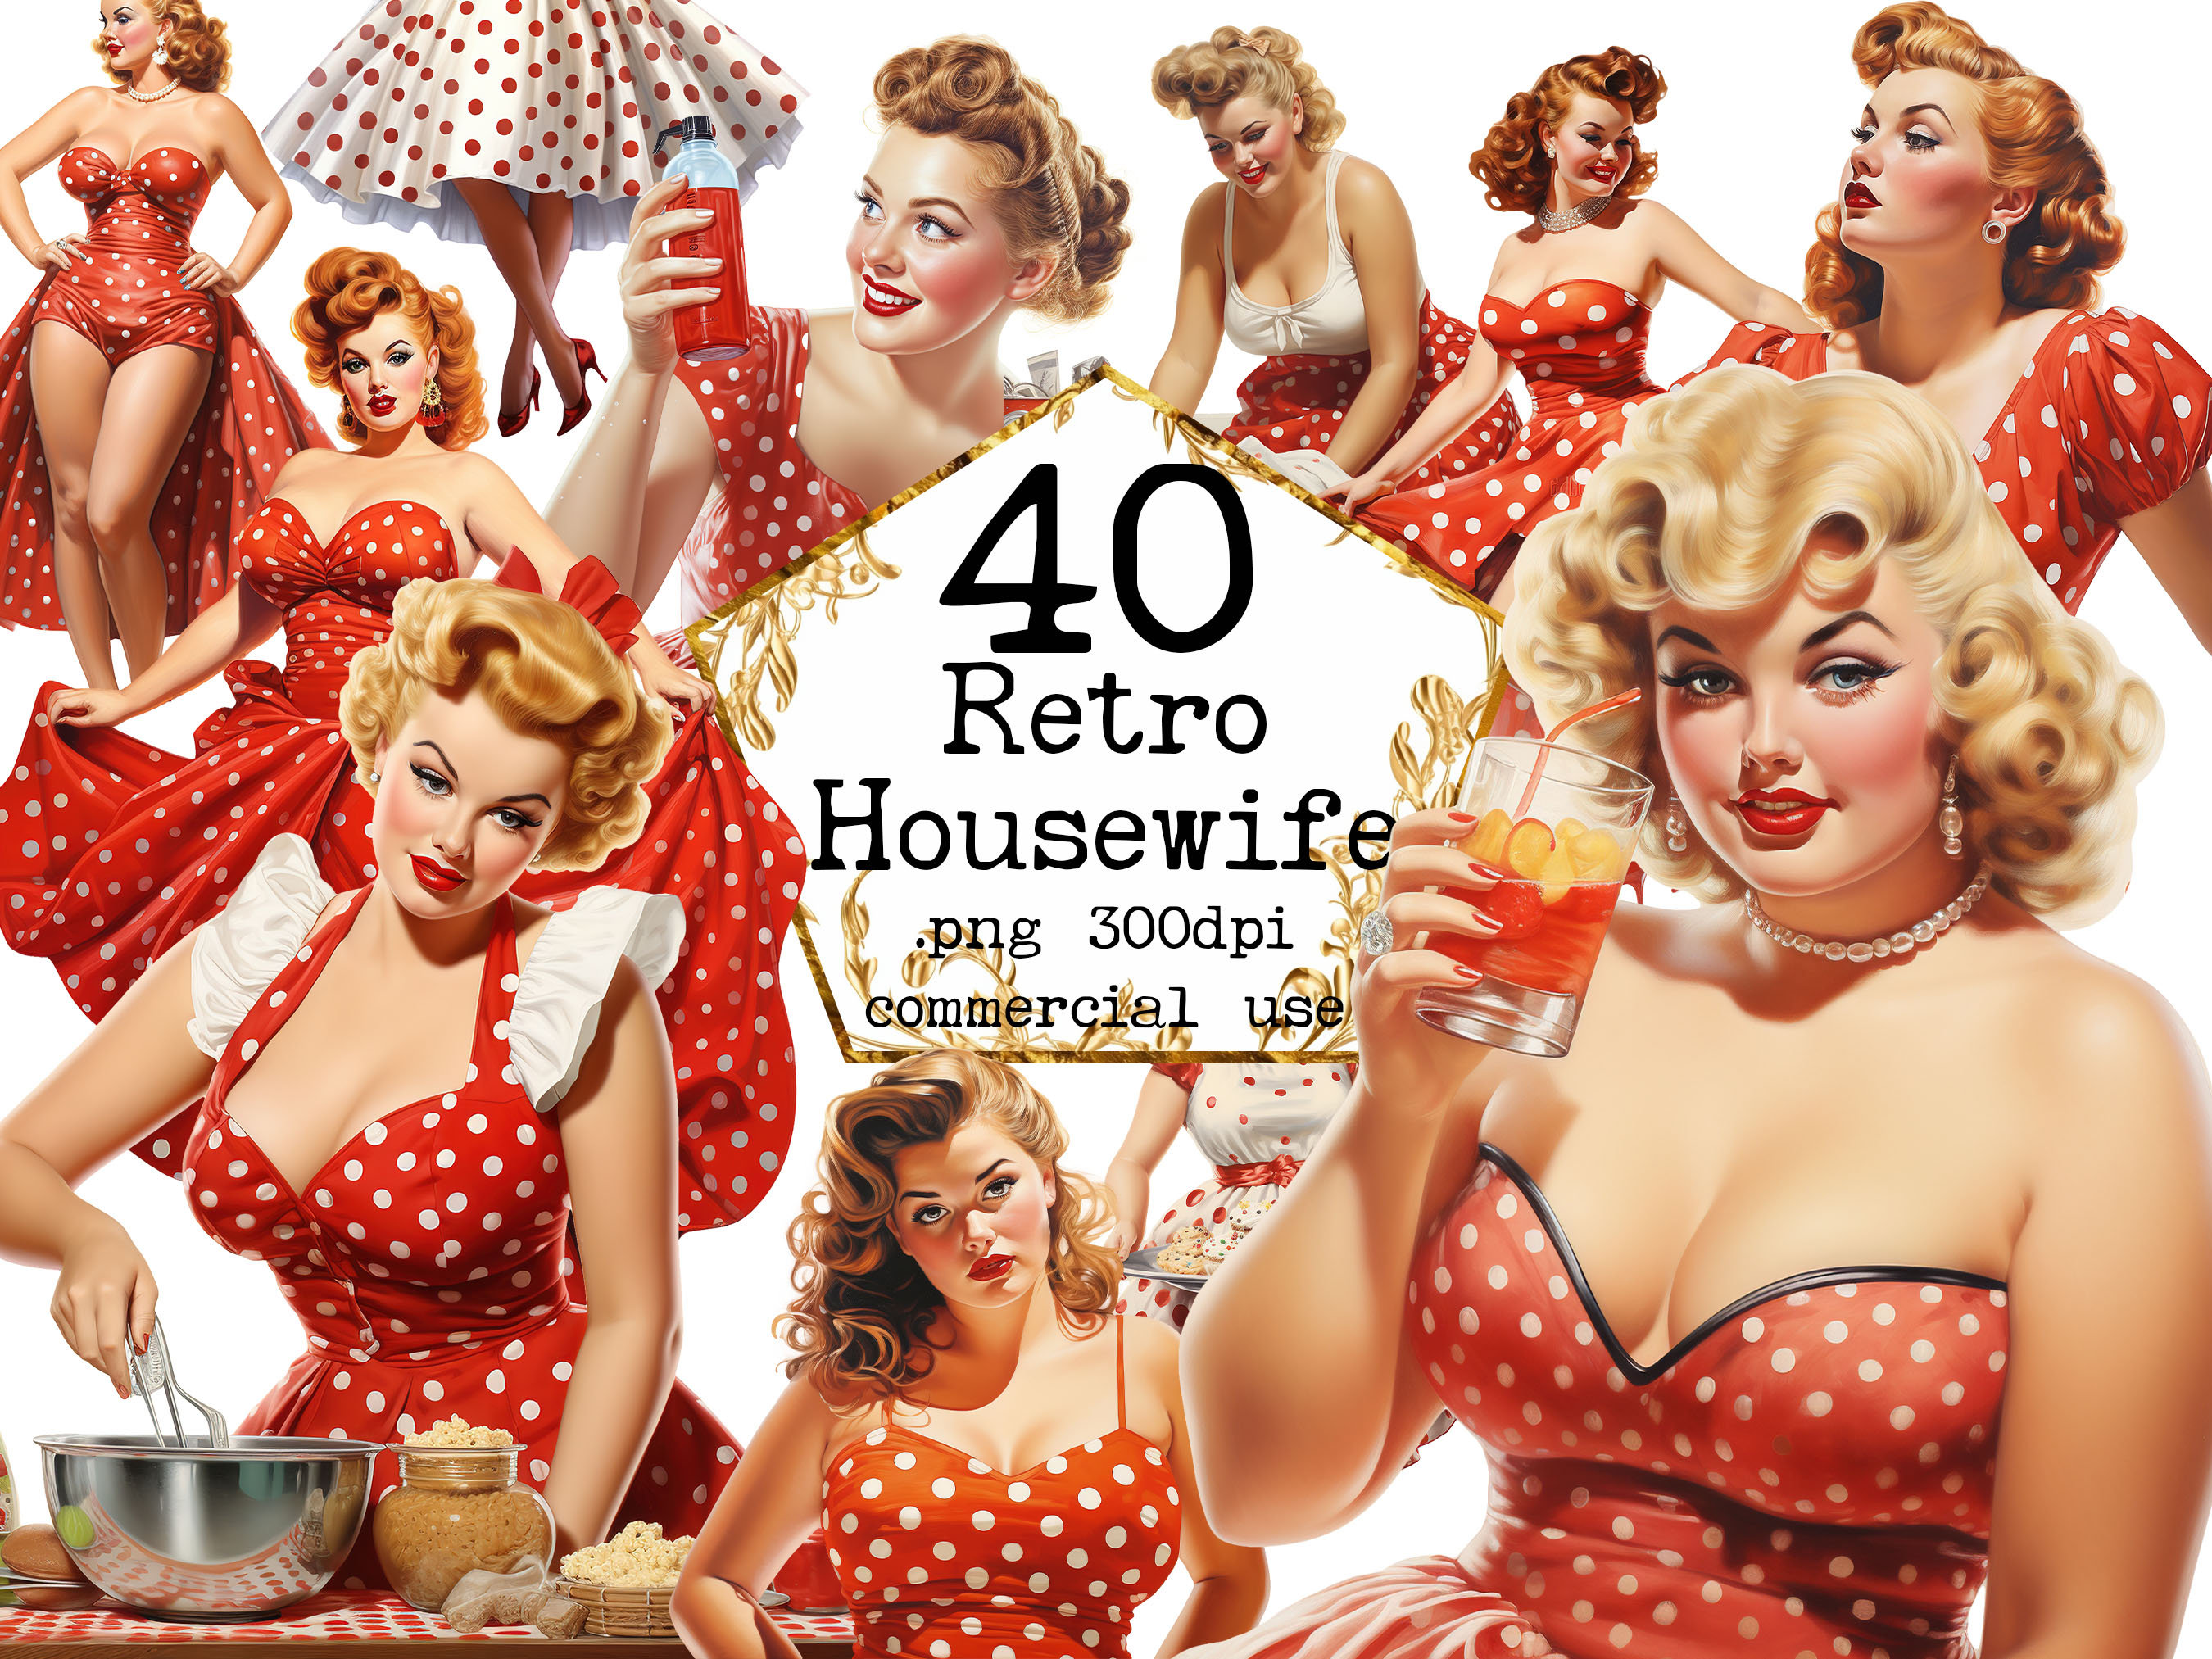 1940s Housewife